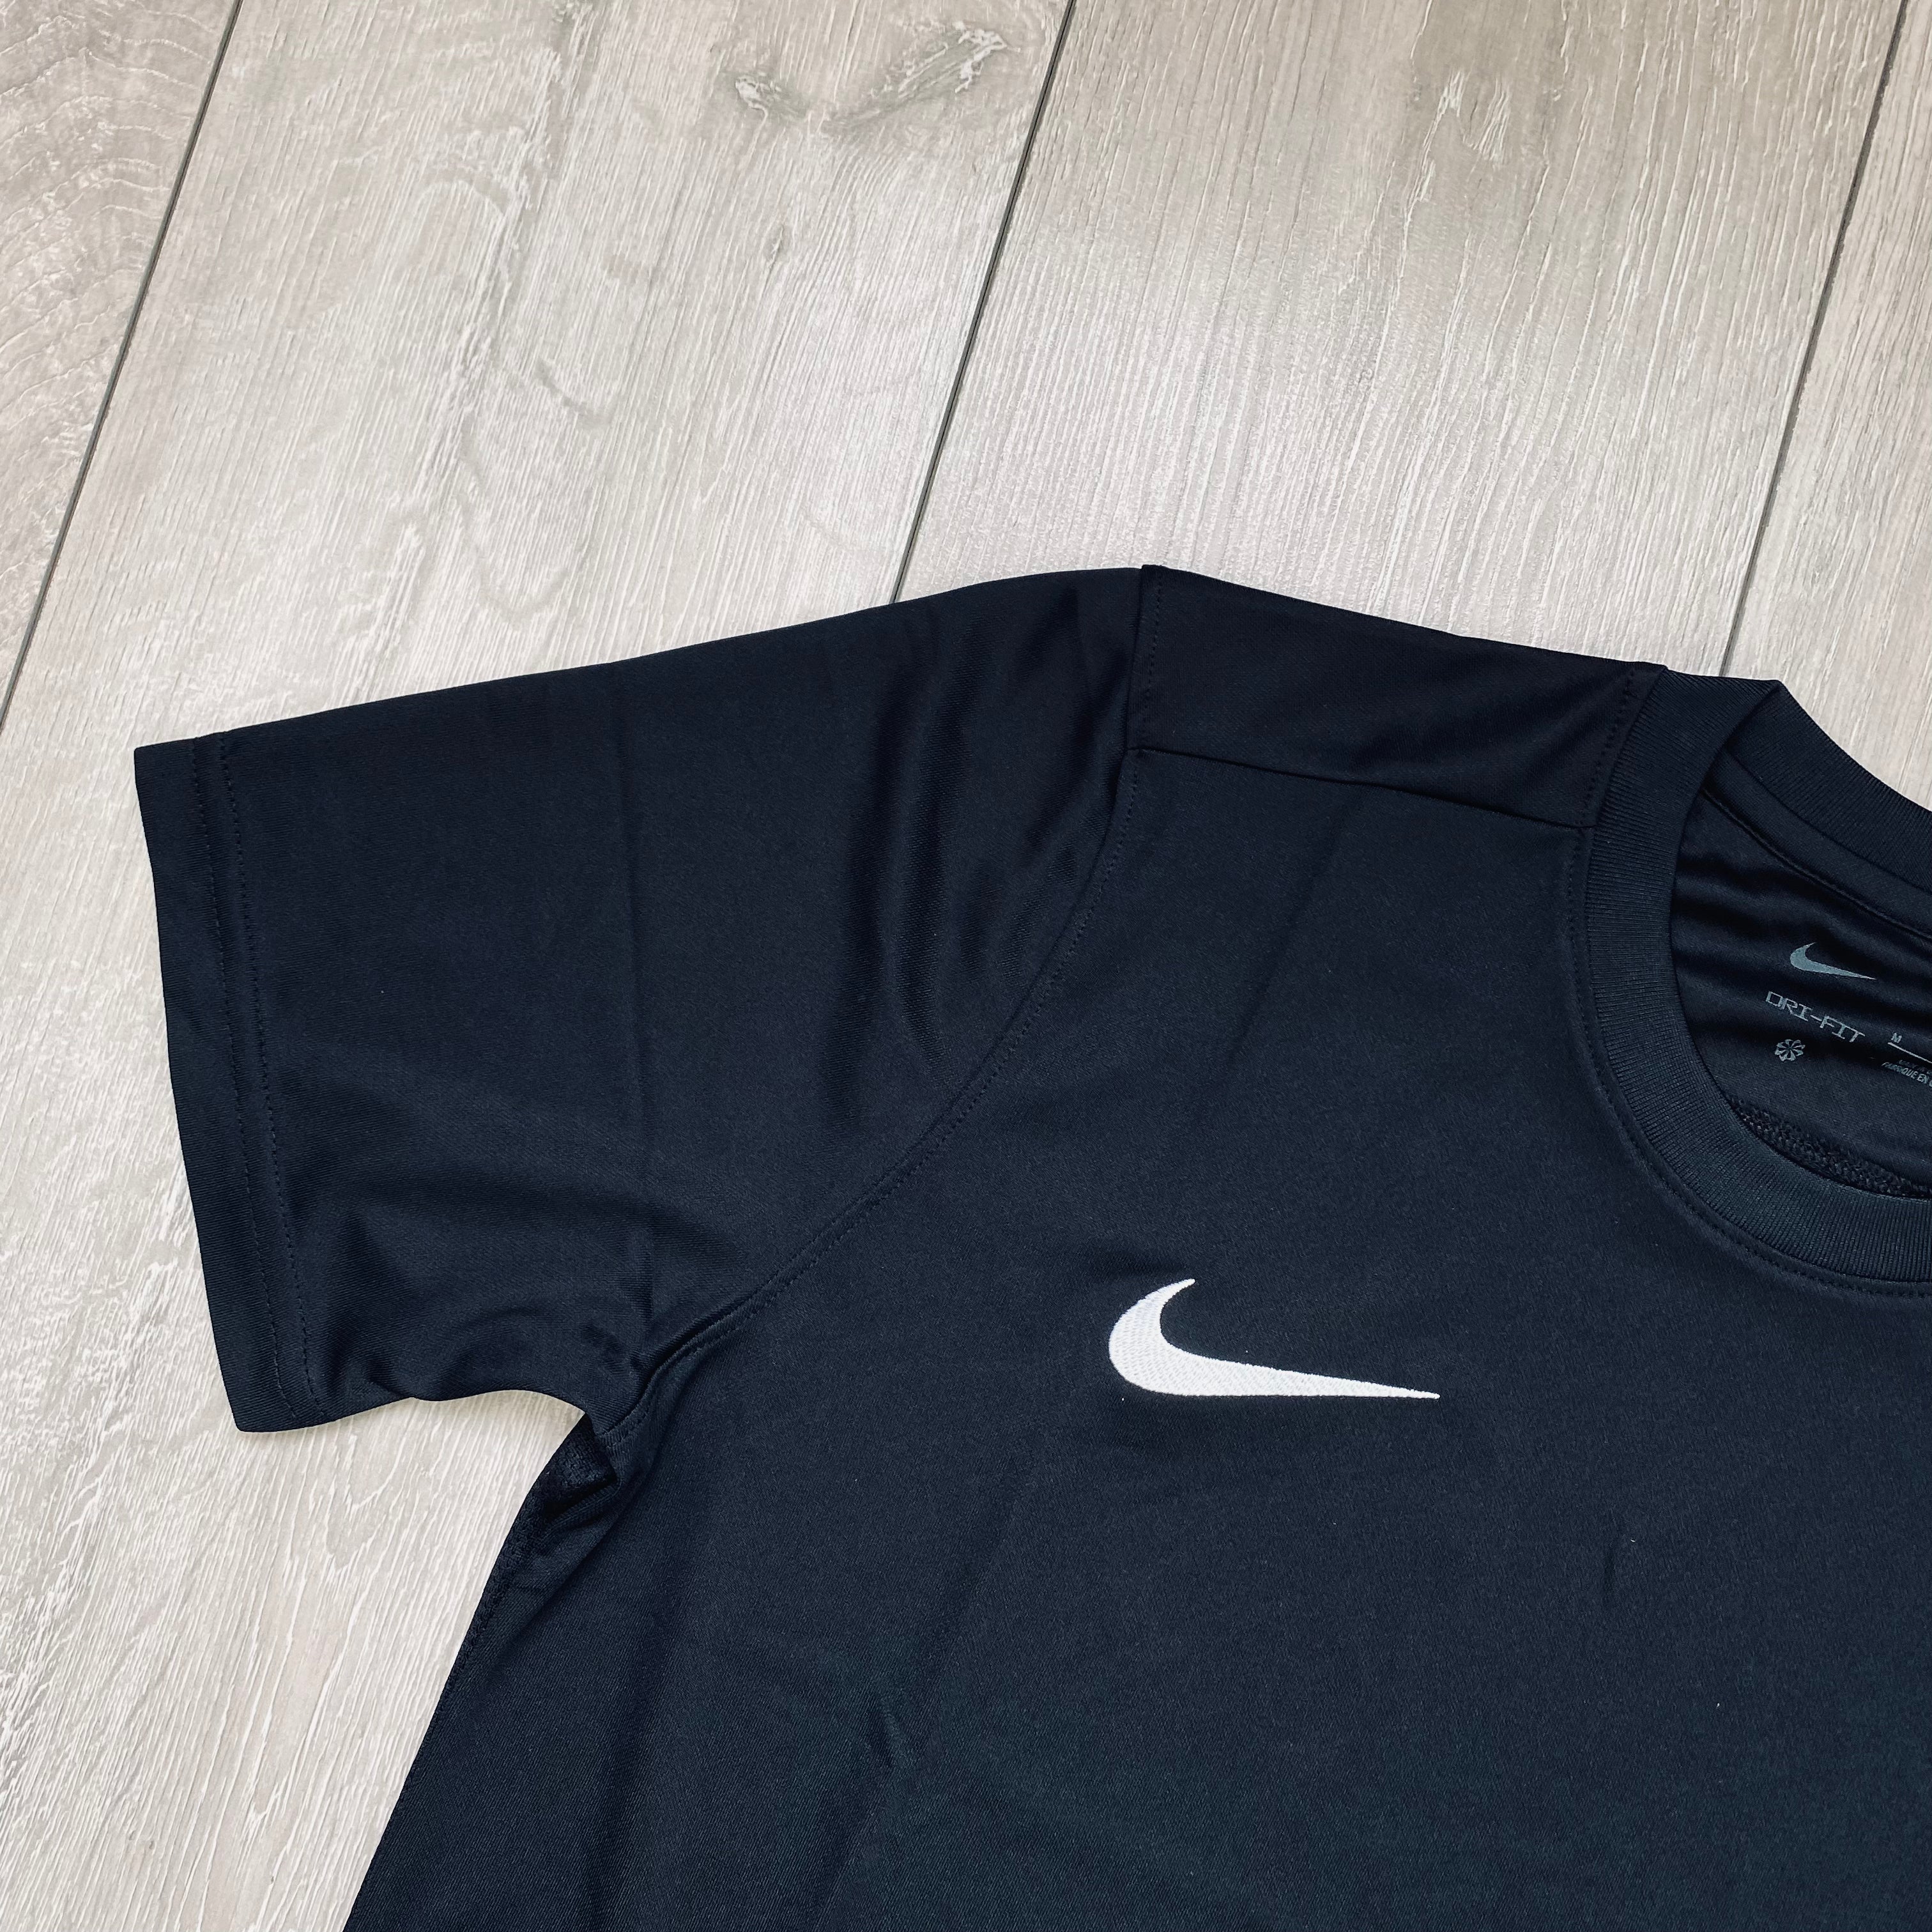 Nike Dri-Fit T-Shirt - Black